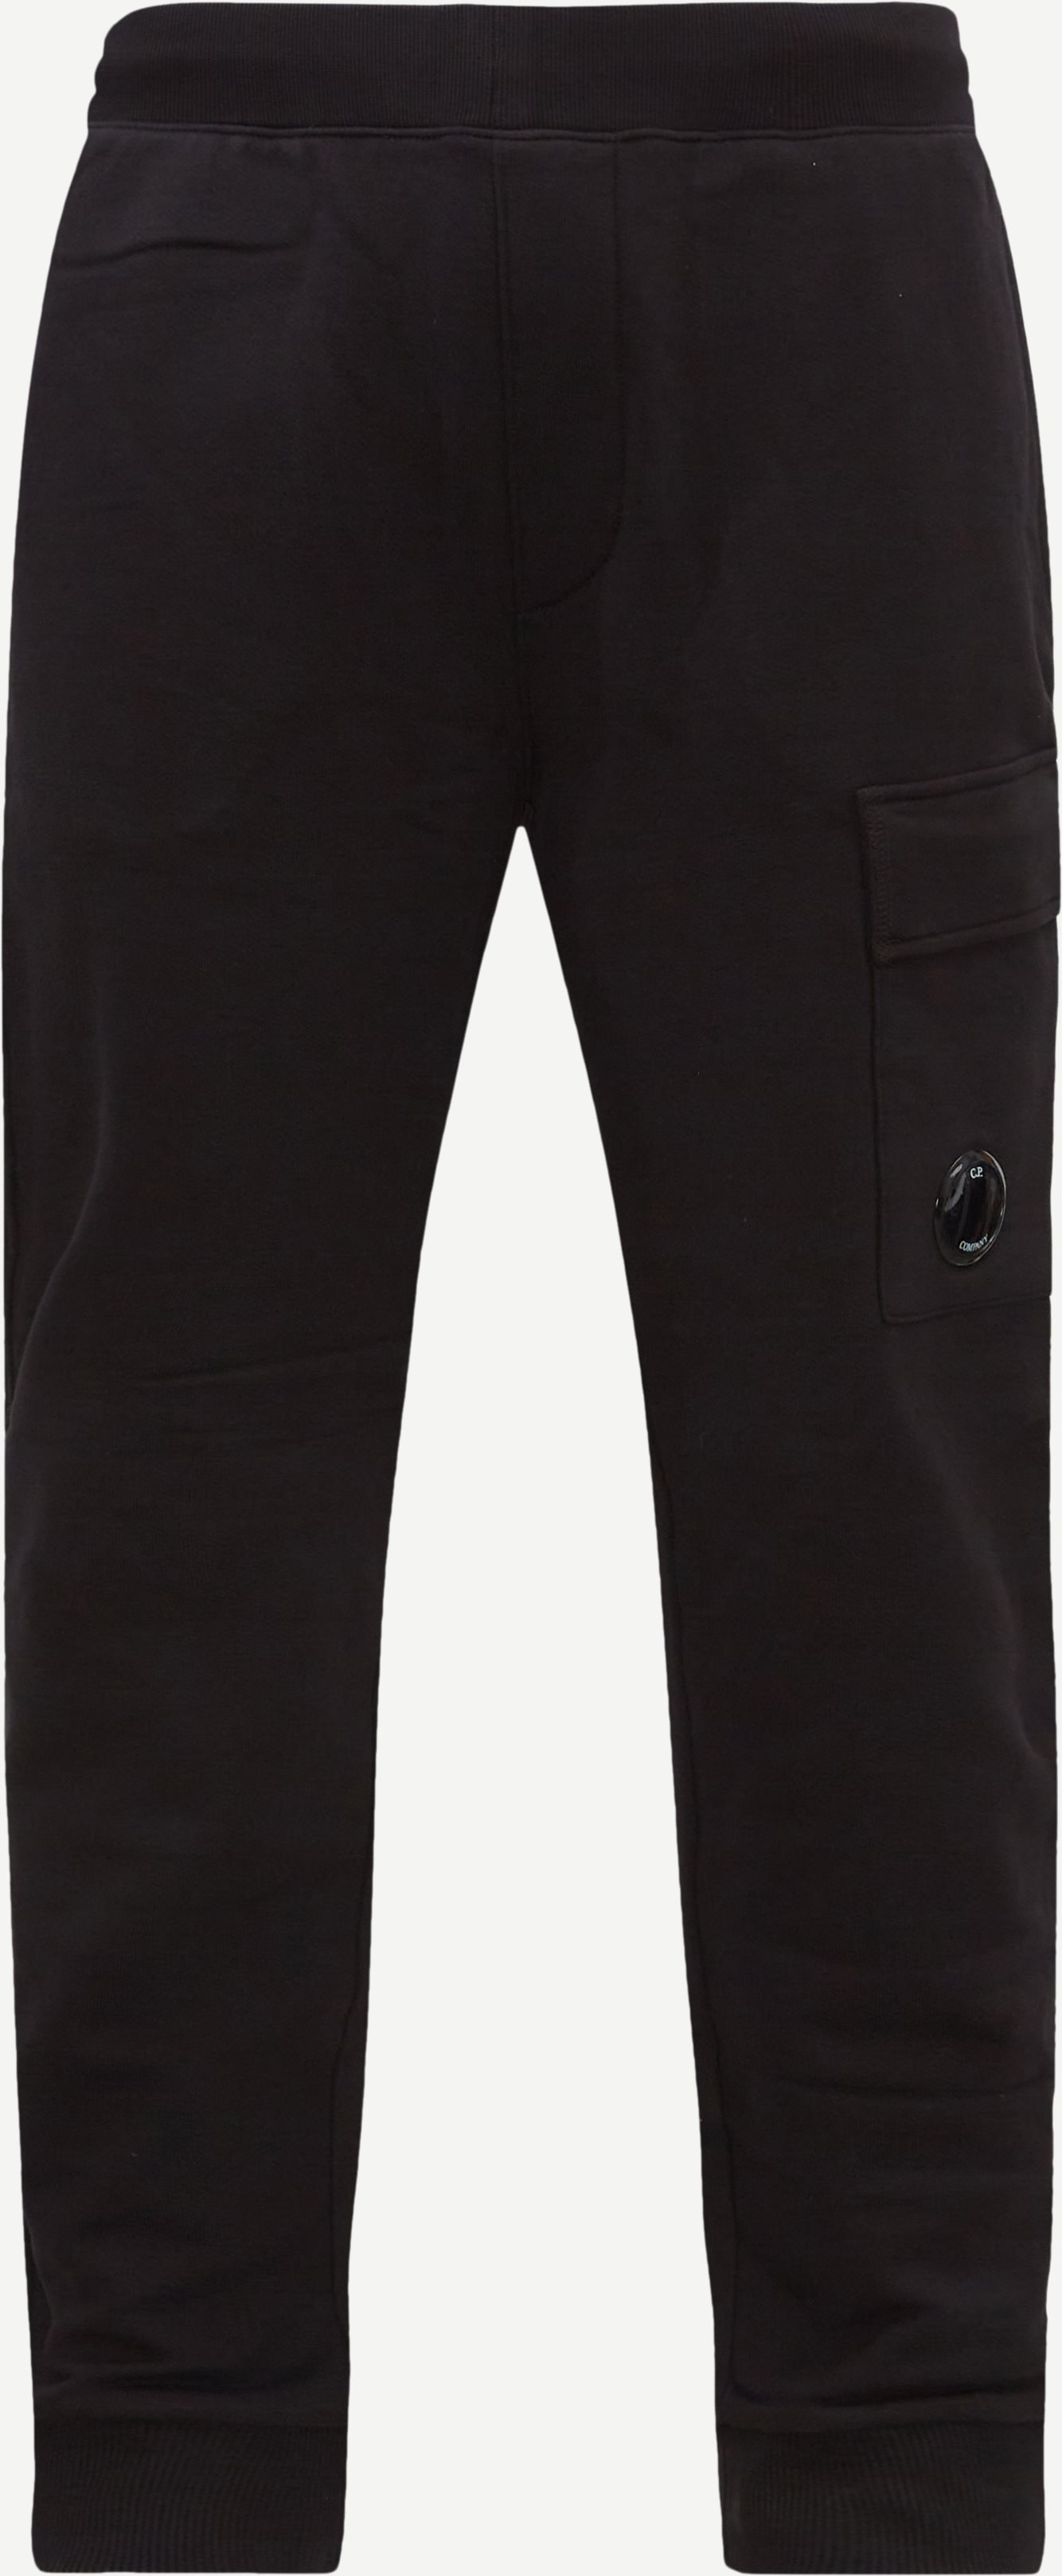 C.P. Company Trousers SP017A 005086W Black